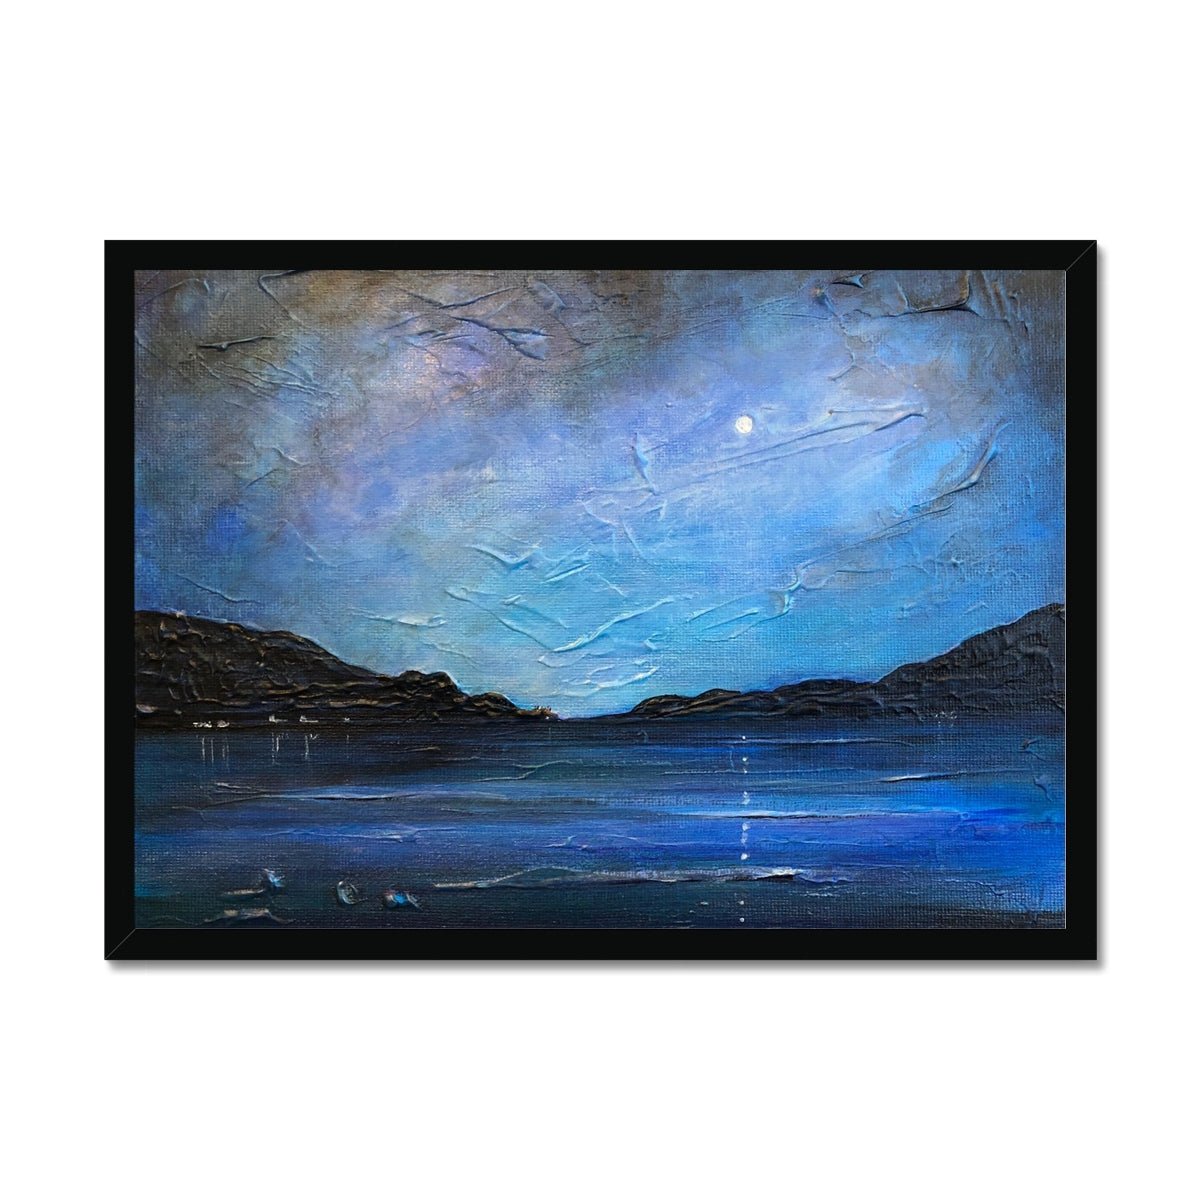 Loch Ness Moonlight Painting | Framed Prints From Scotland-Framed Prints-Scottish Lochs & Mountains Art Gallery-A2 Landscape-Black Frame-Paintings, Prints, Homeware, Art Gifts From Scotland By Scottish Artist Kevin Hunter